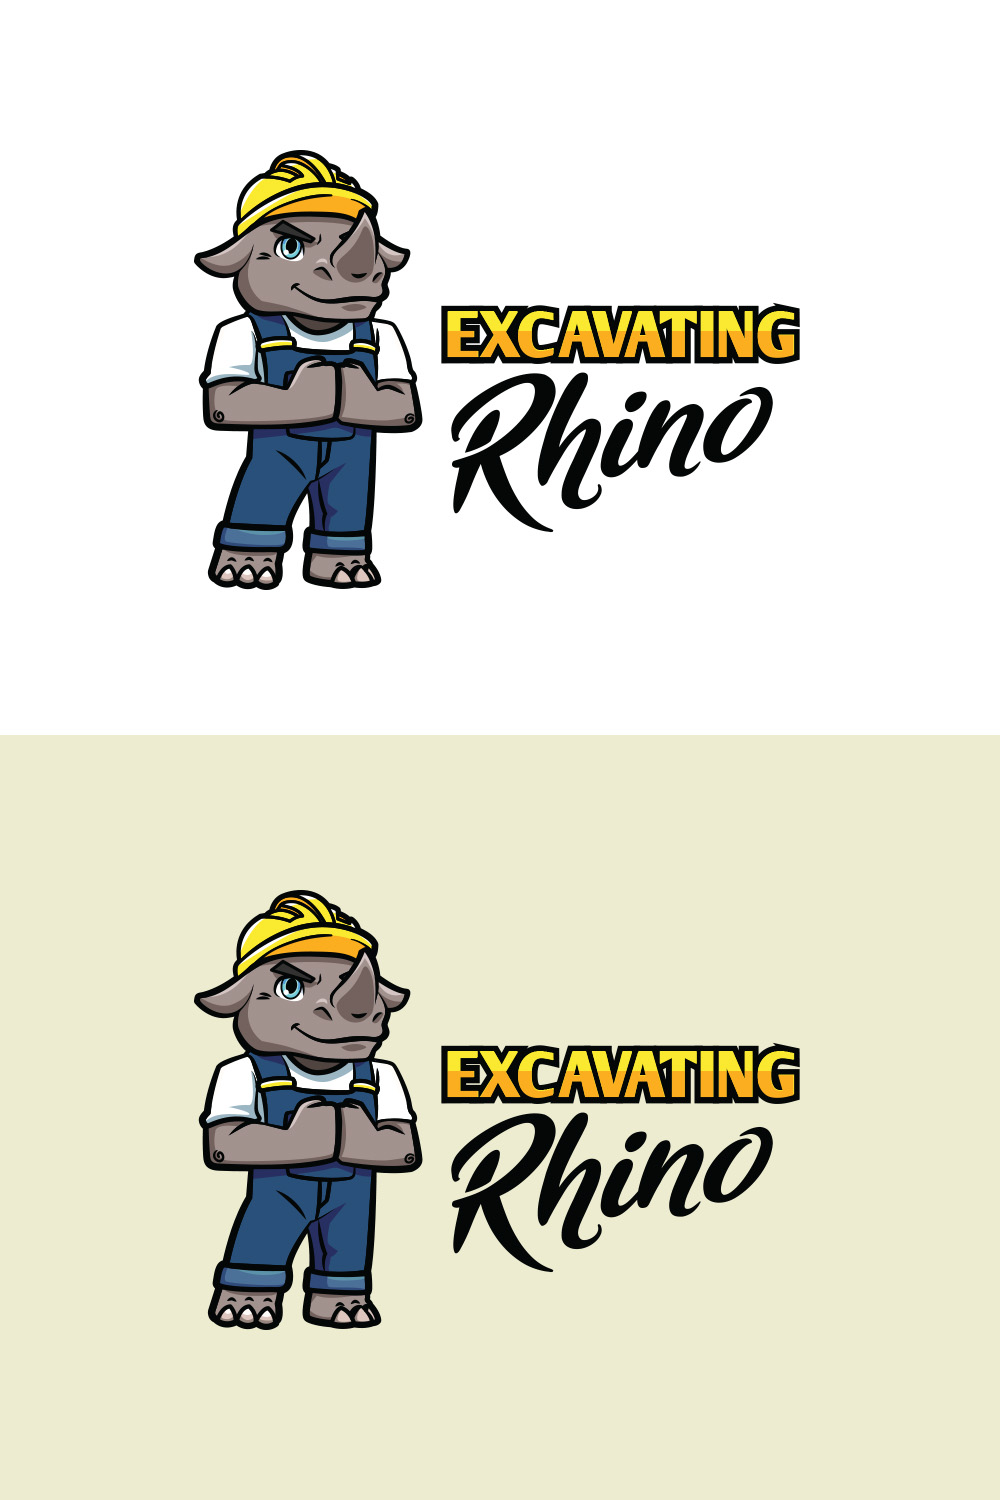 Excavating Rhino pinterest preview image.